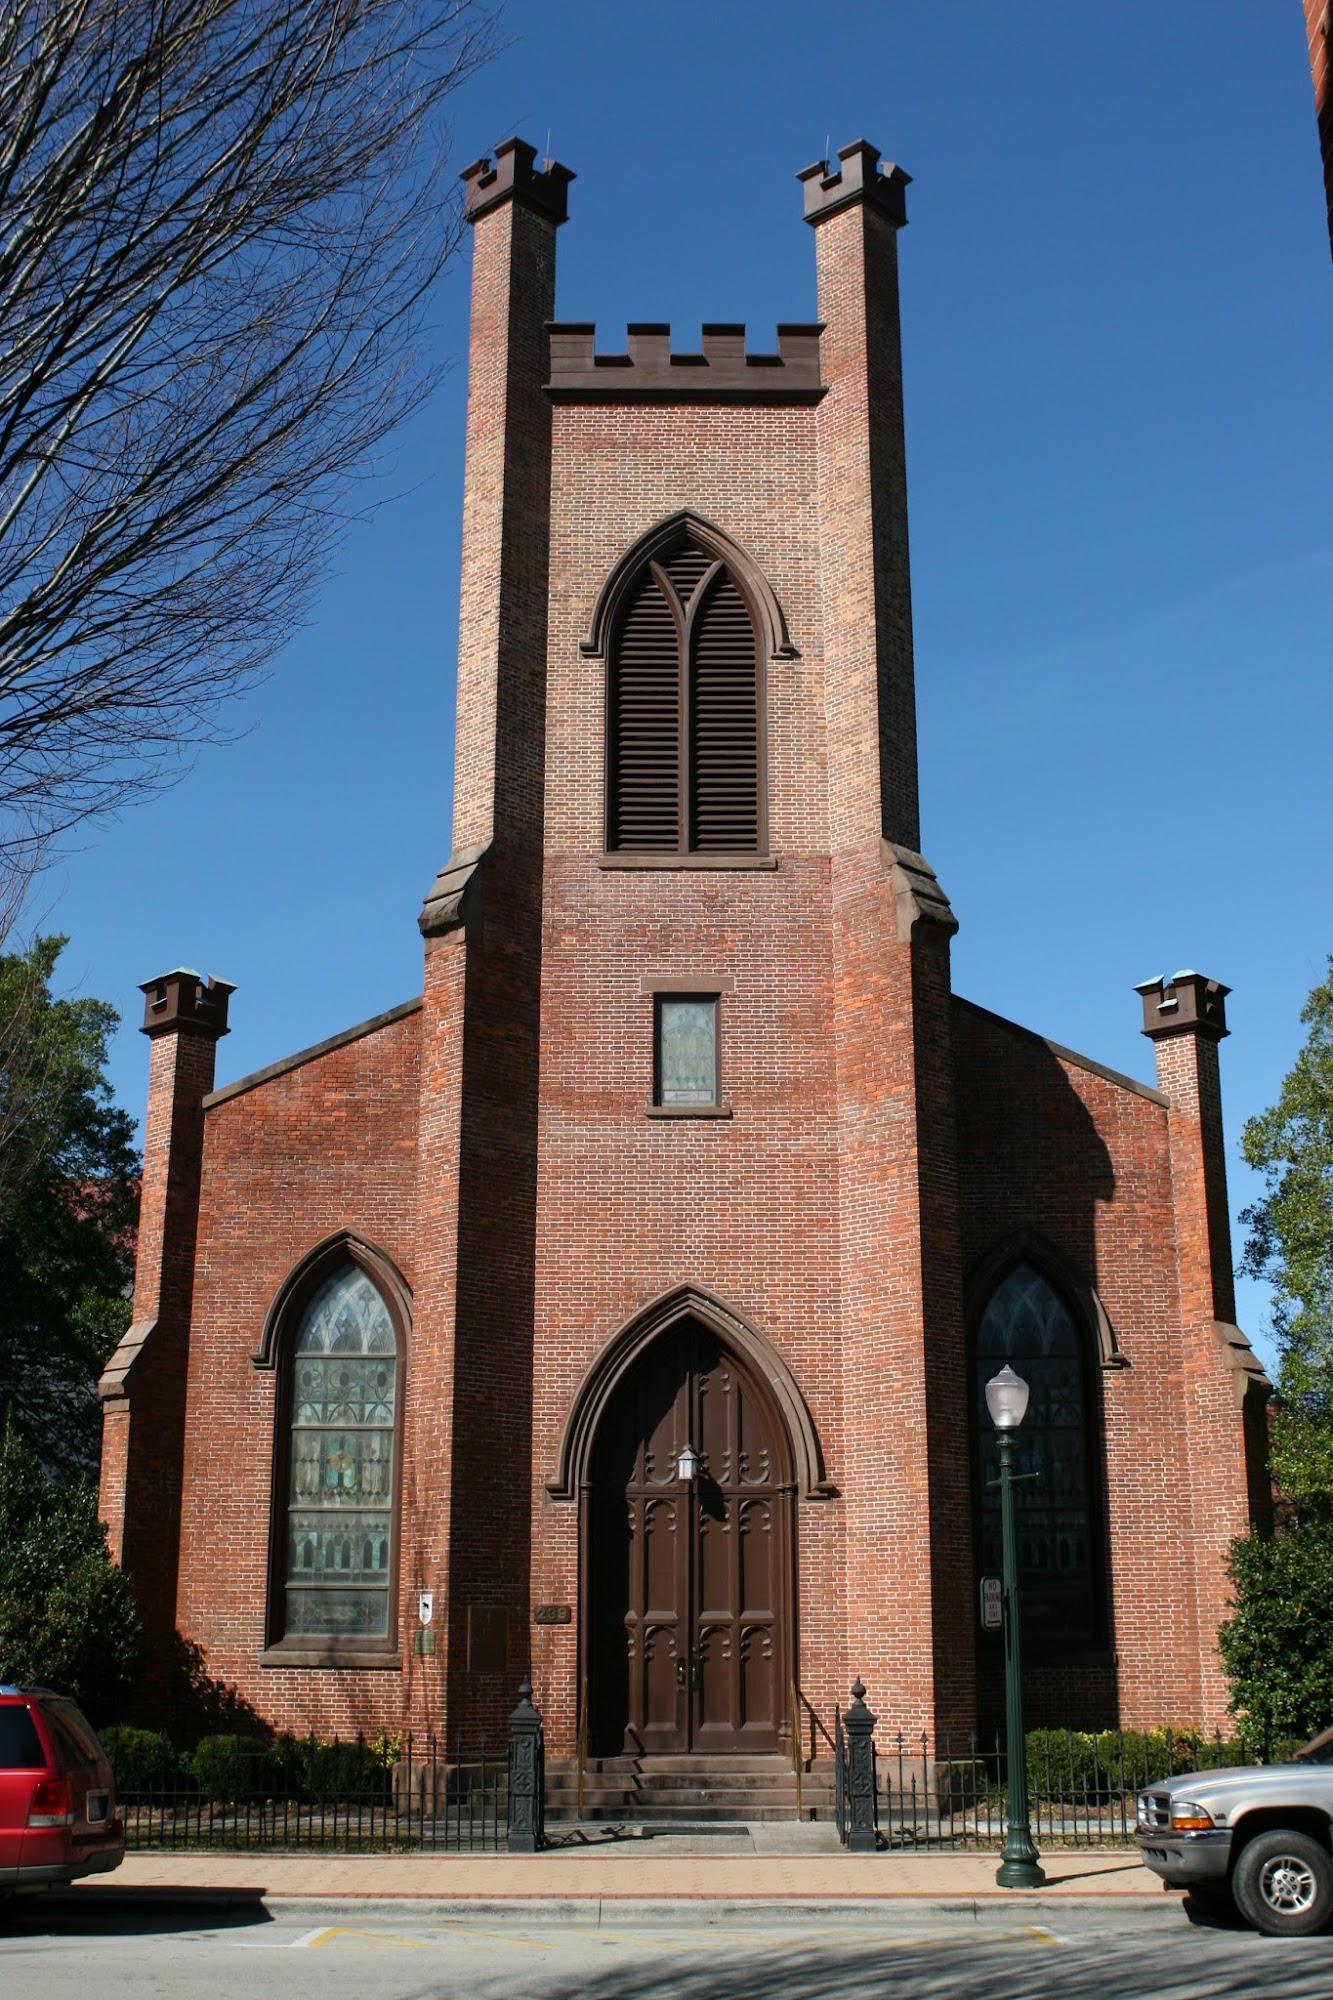 First Baptist Church of New Bern